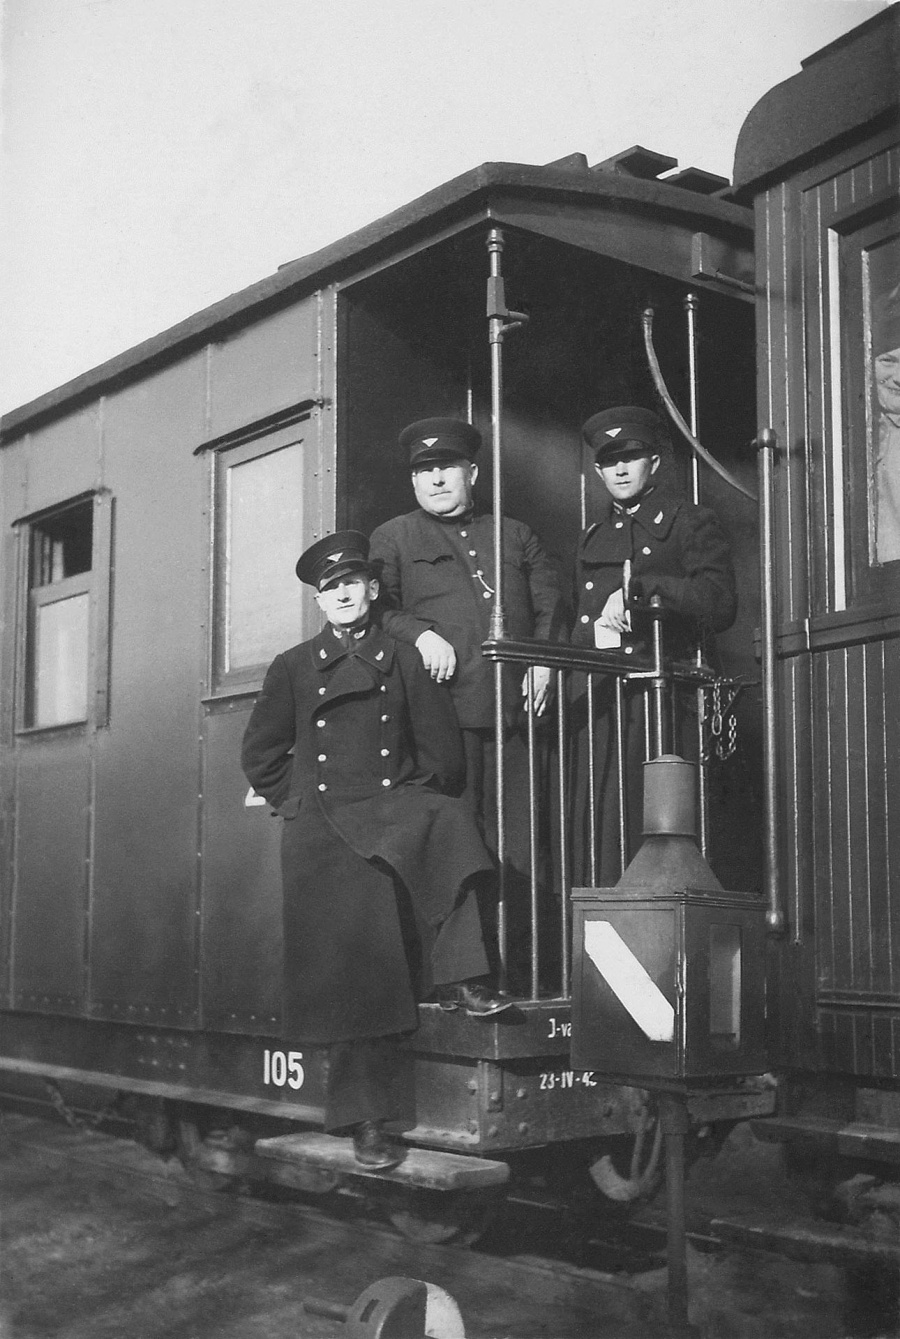 Railway conductors
20.05.1940
Saku
